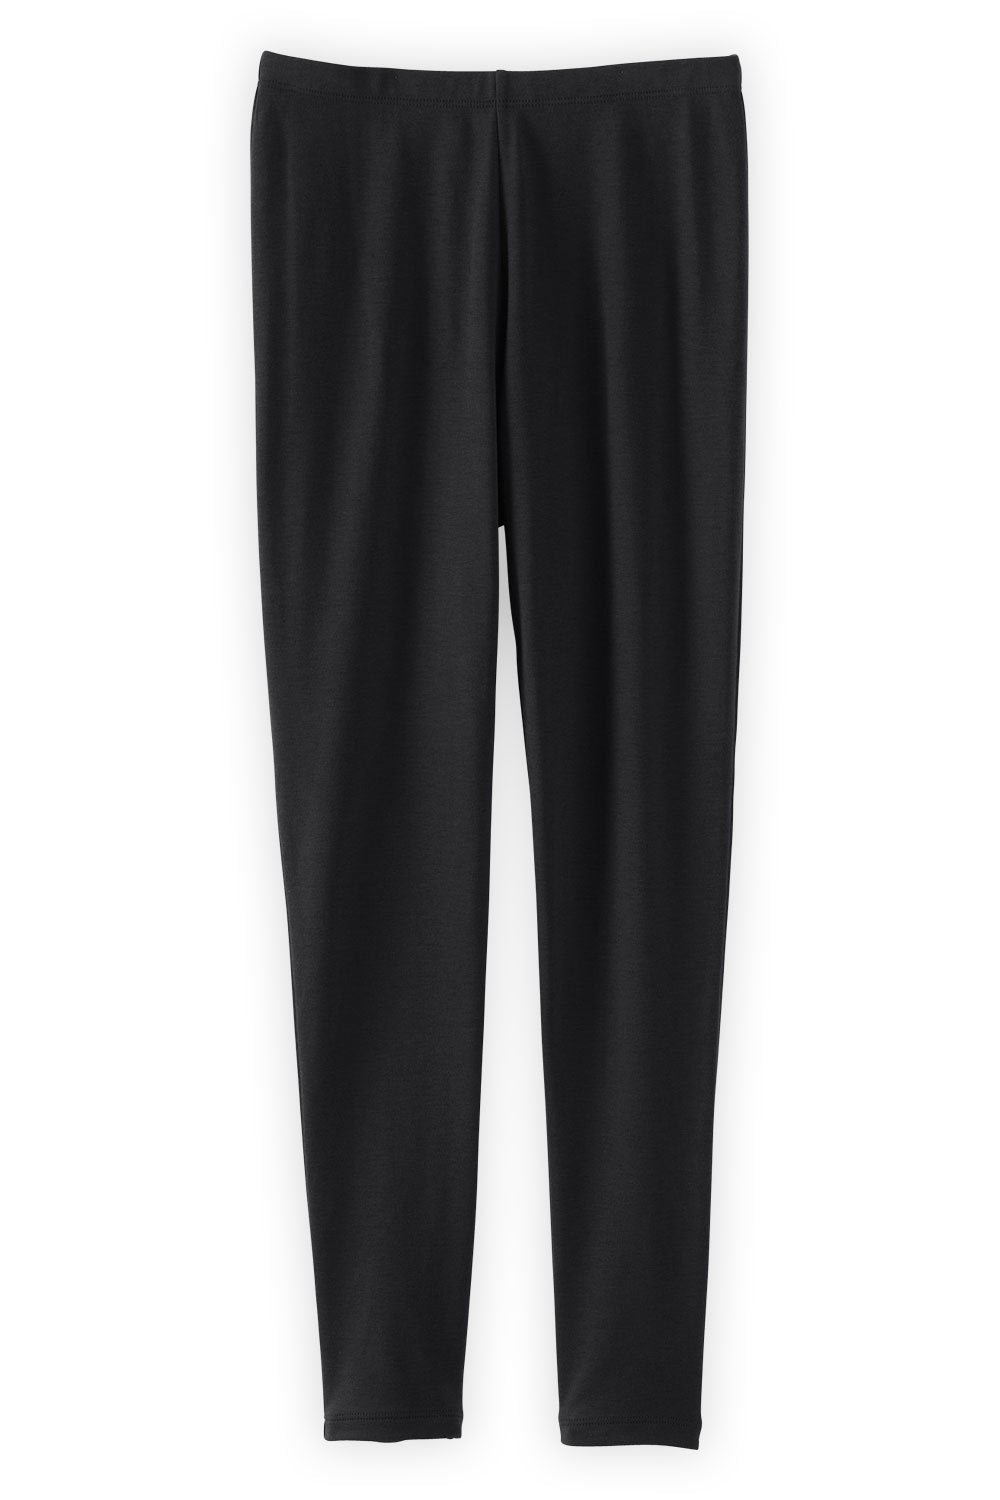 PACT 100% organic cotton Women's Medium Black Purefit Legging - clothing &  accessories - by owner - apparel sale 